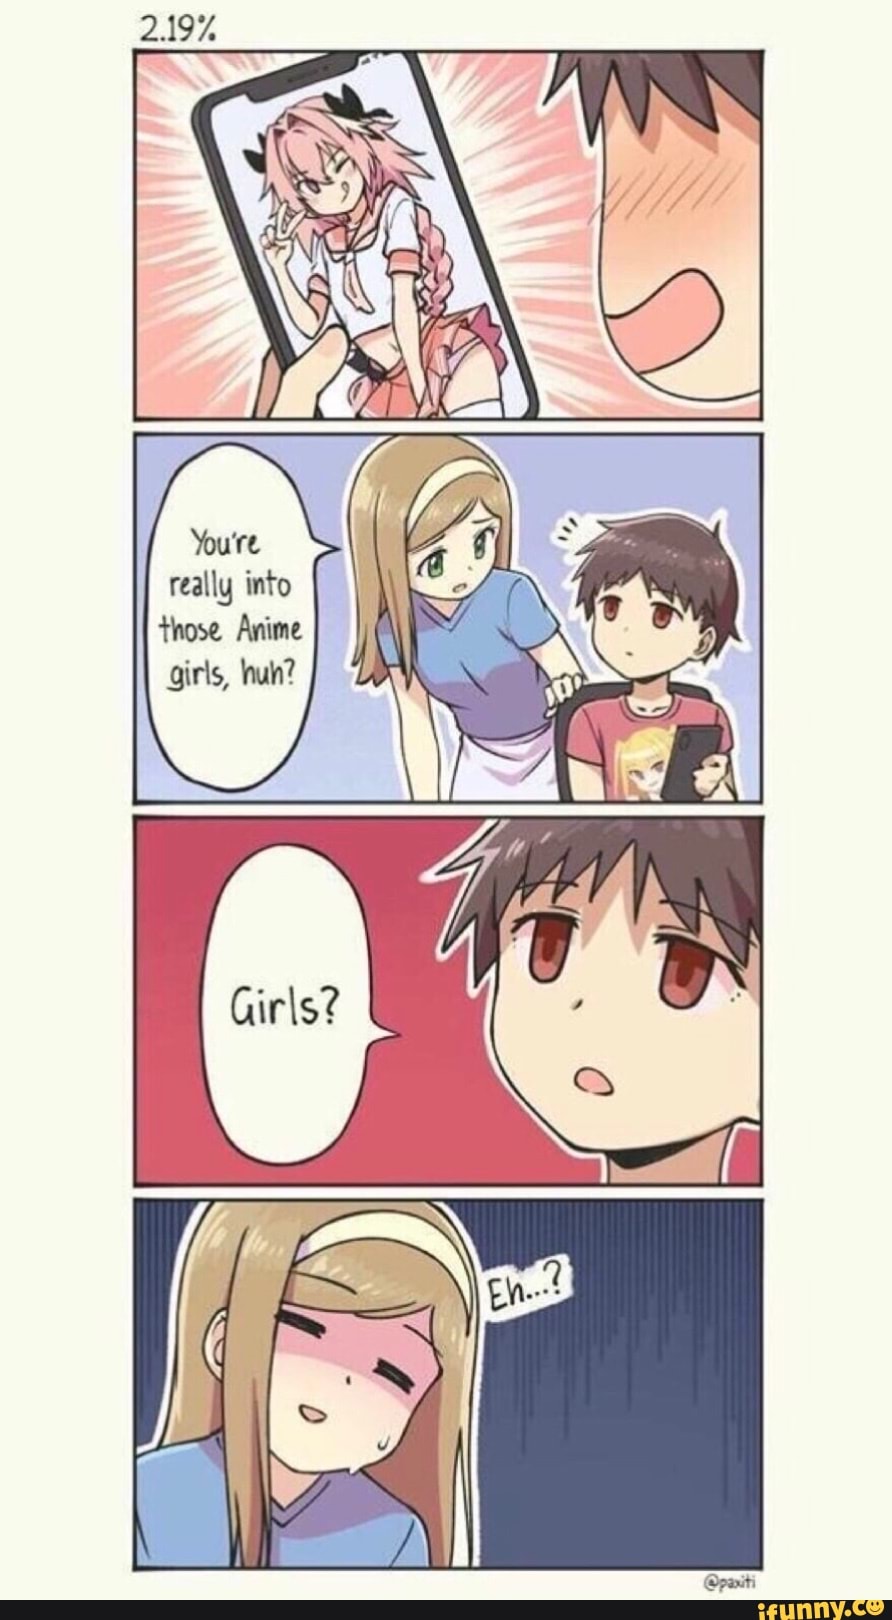 gay anime boy meme